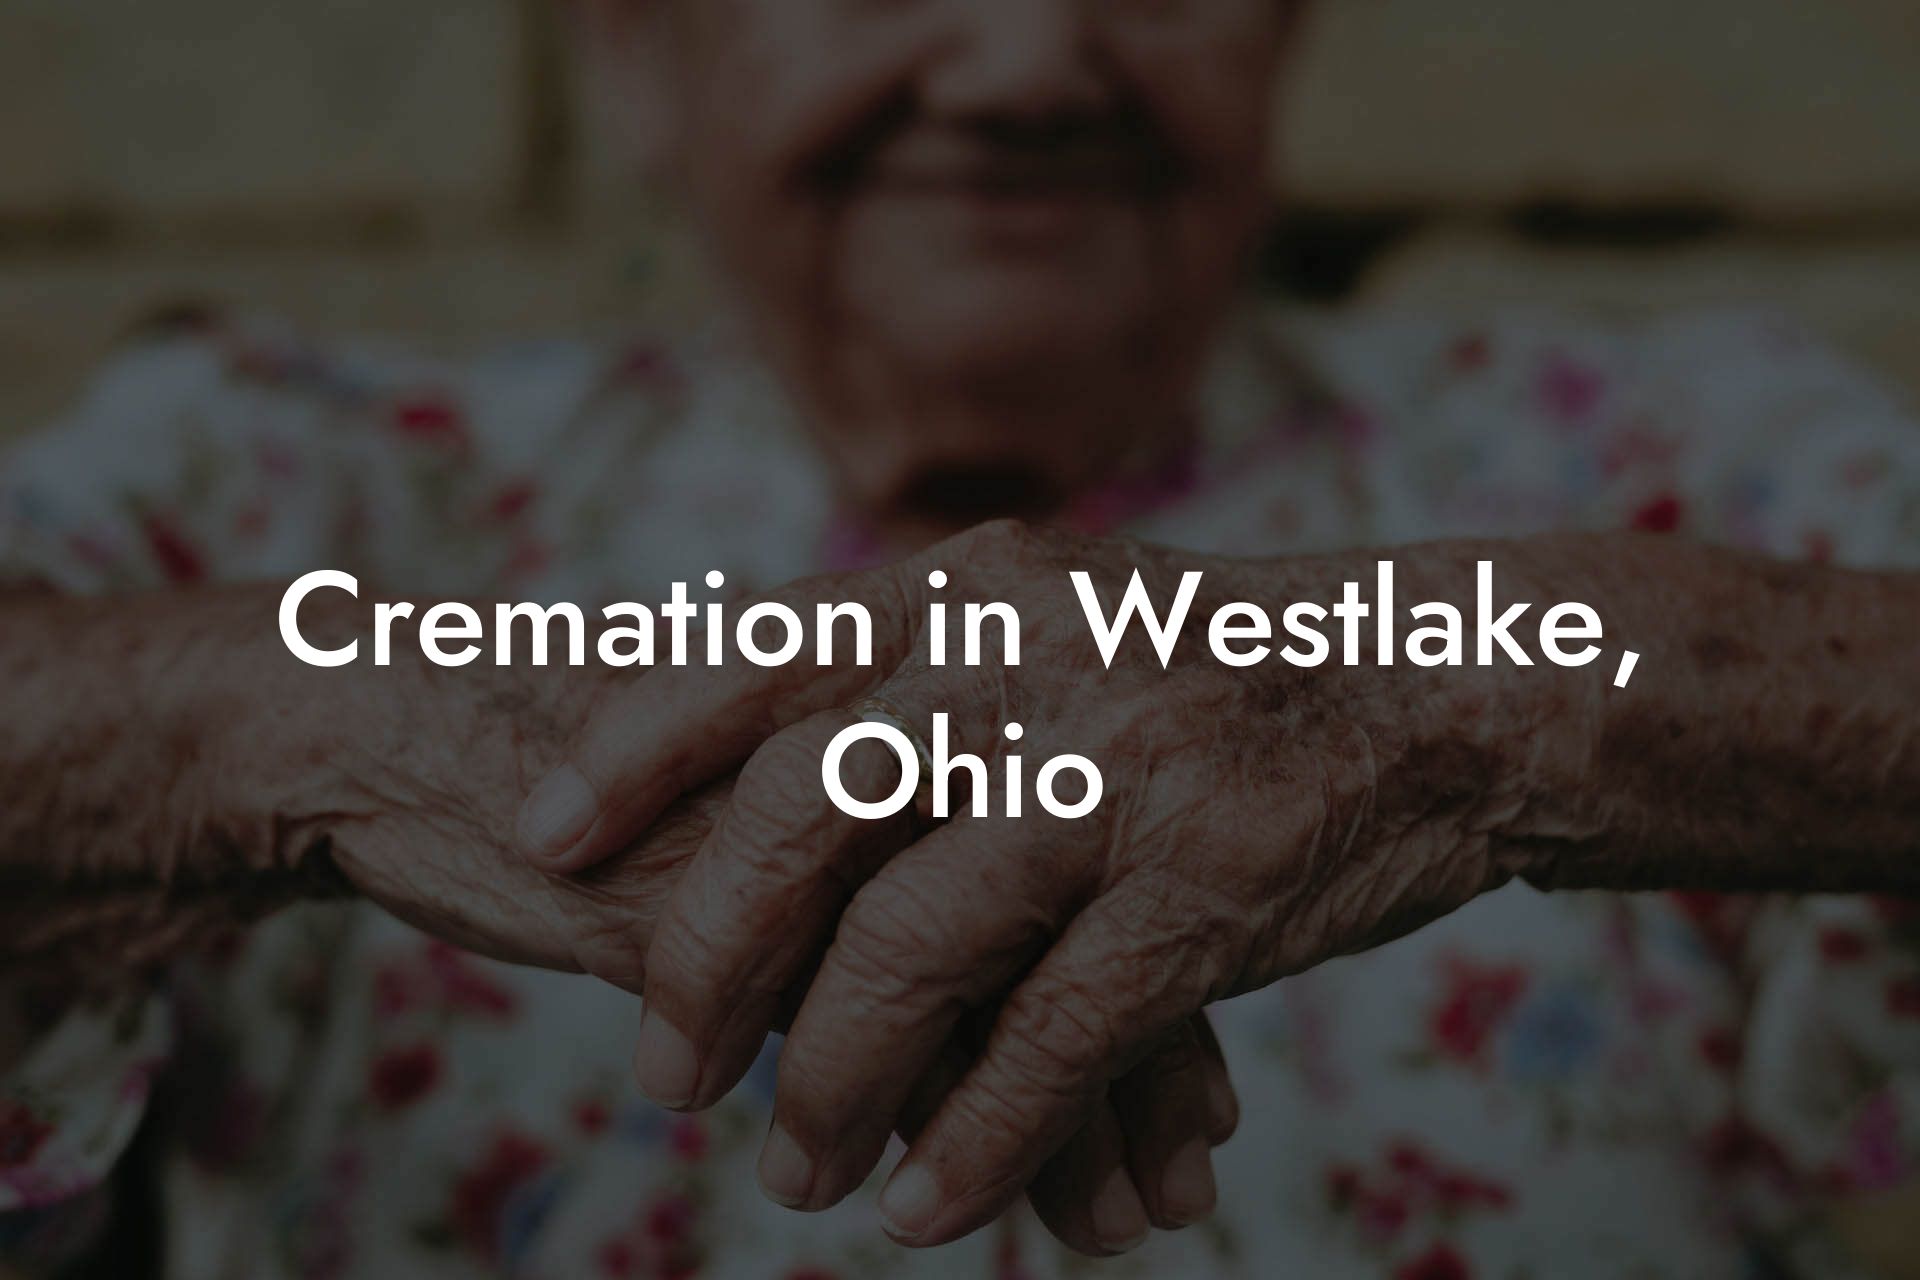 Cremation in Westlake, Ohio